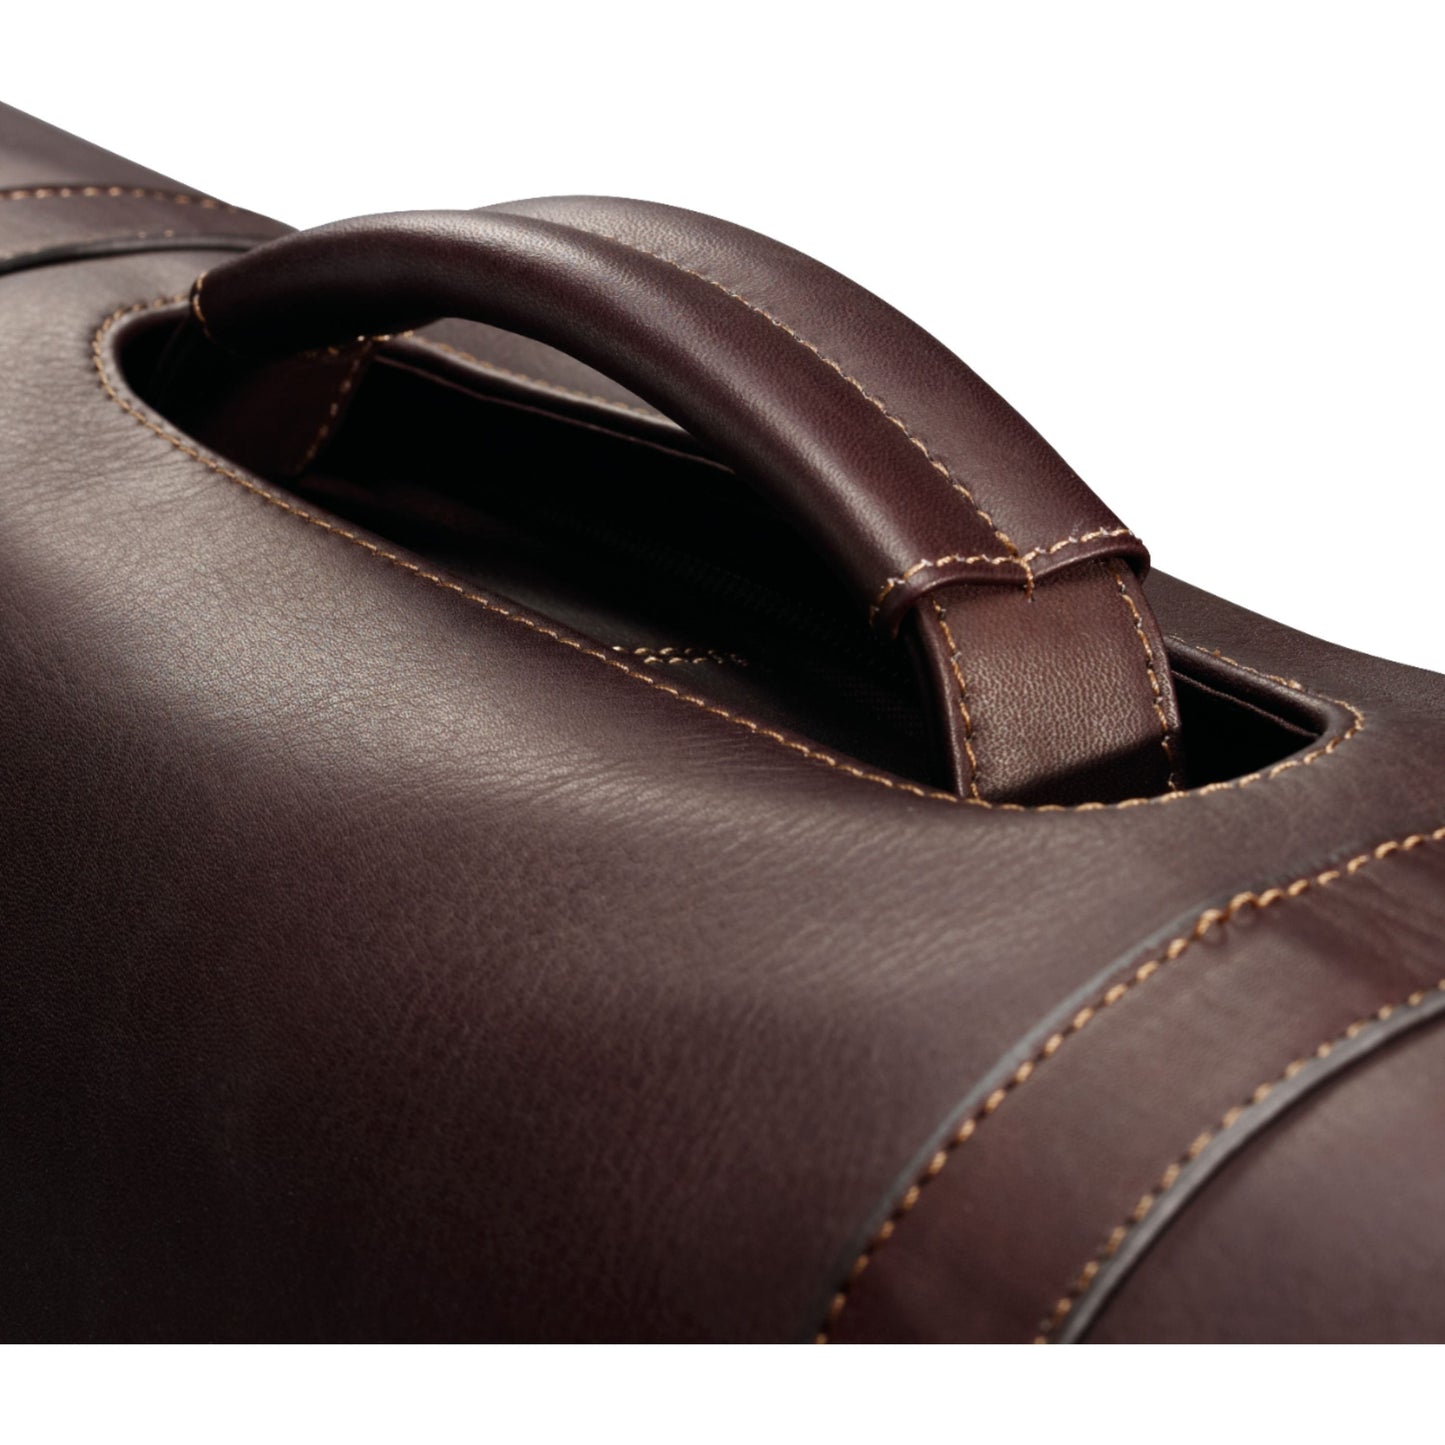 Samsonite Columbian Leather Business Case, Brown